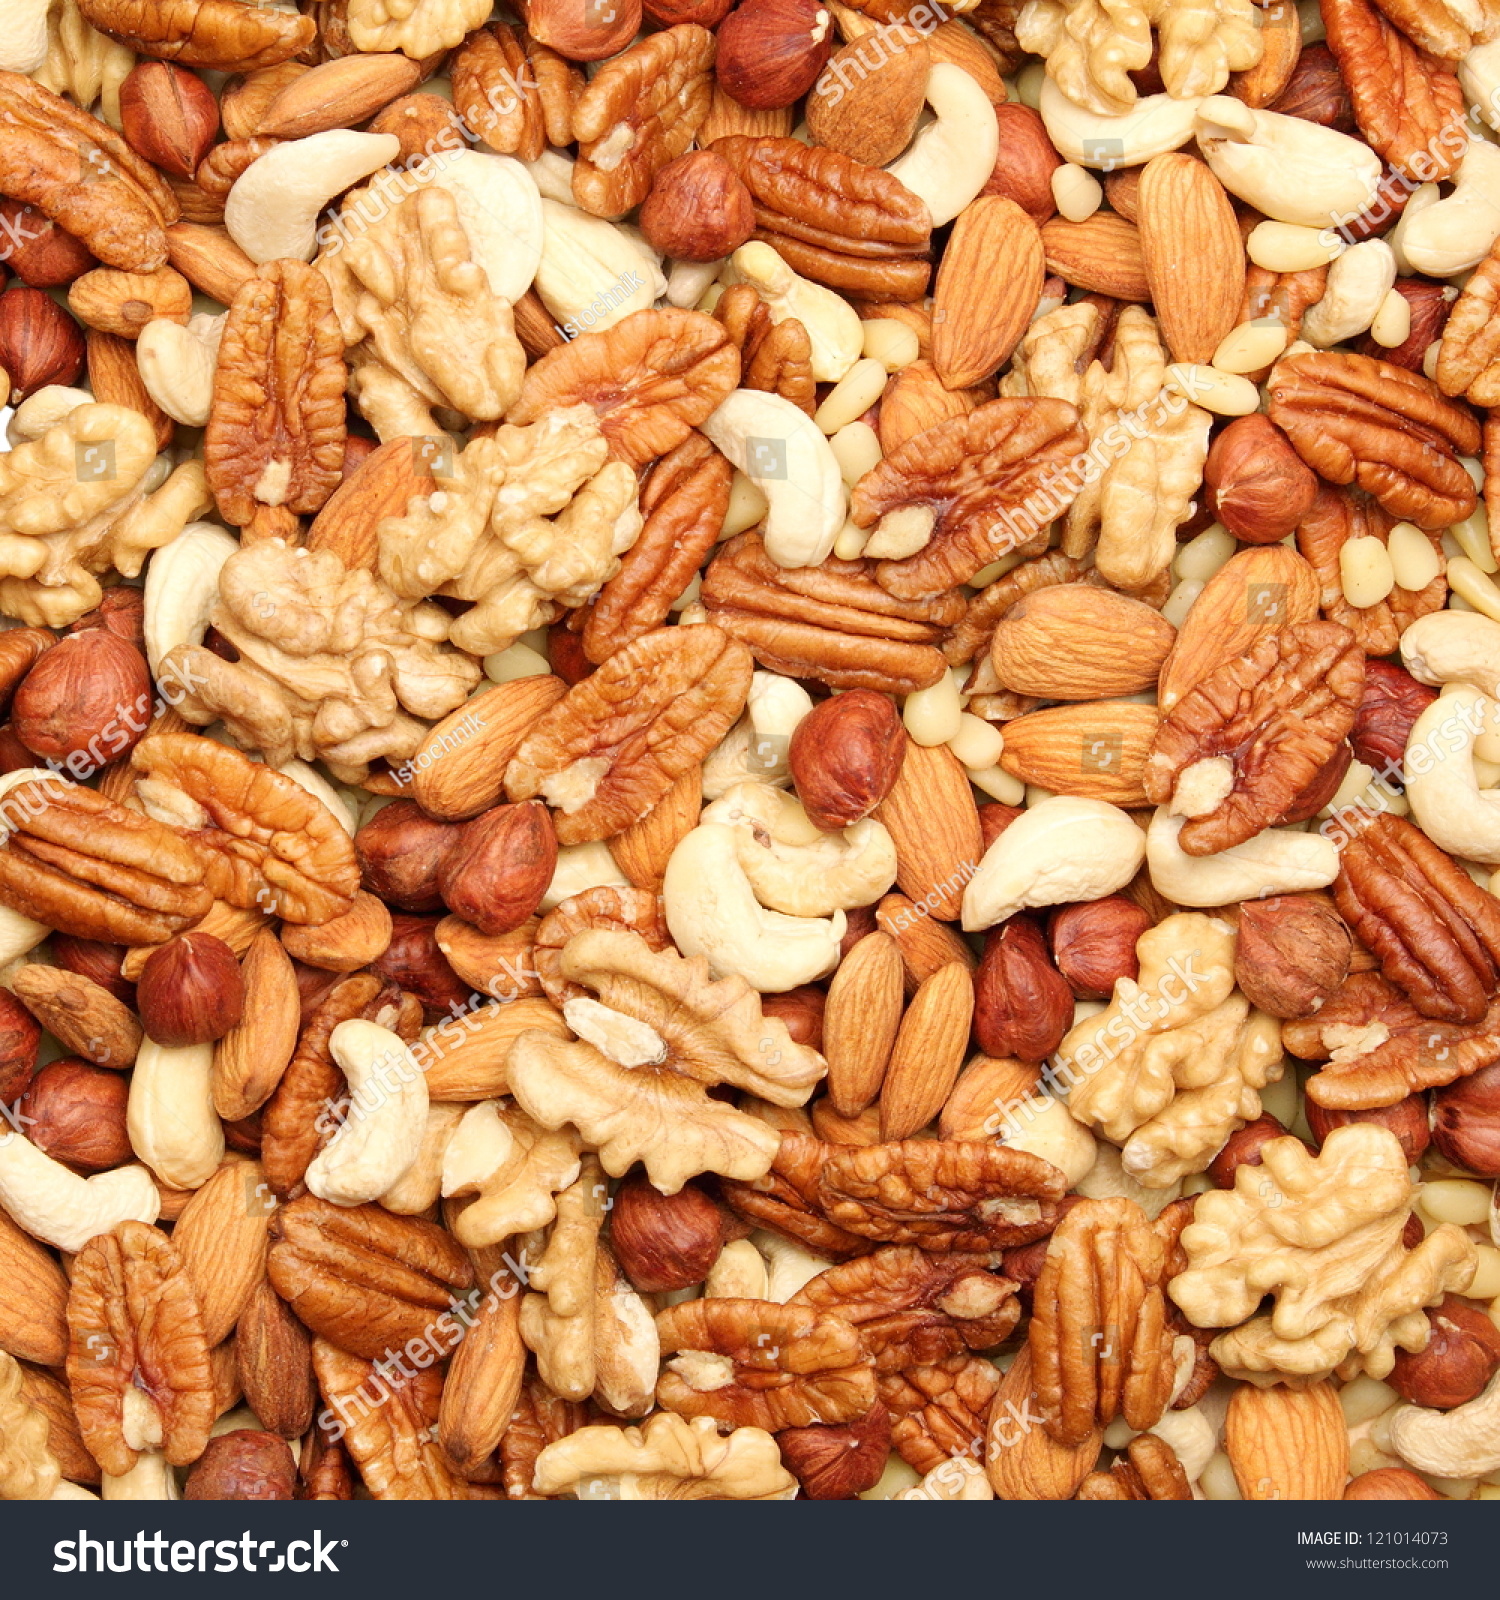 stock-photo-background-of-mixed-nuts-pecans-hazelnuts-walnuts-cashews-almonds-pine-nuts-pistachios-121014073.jpg